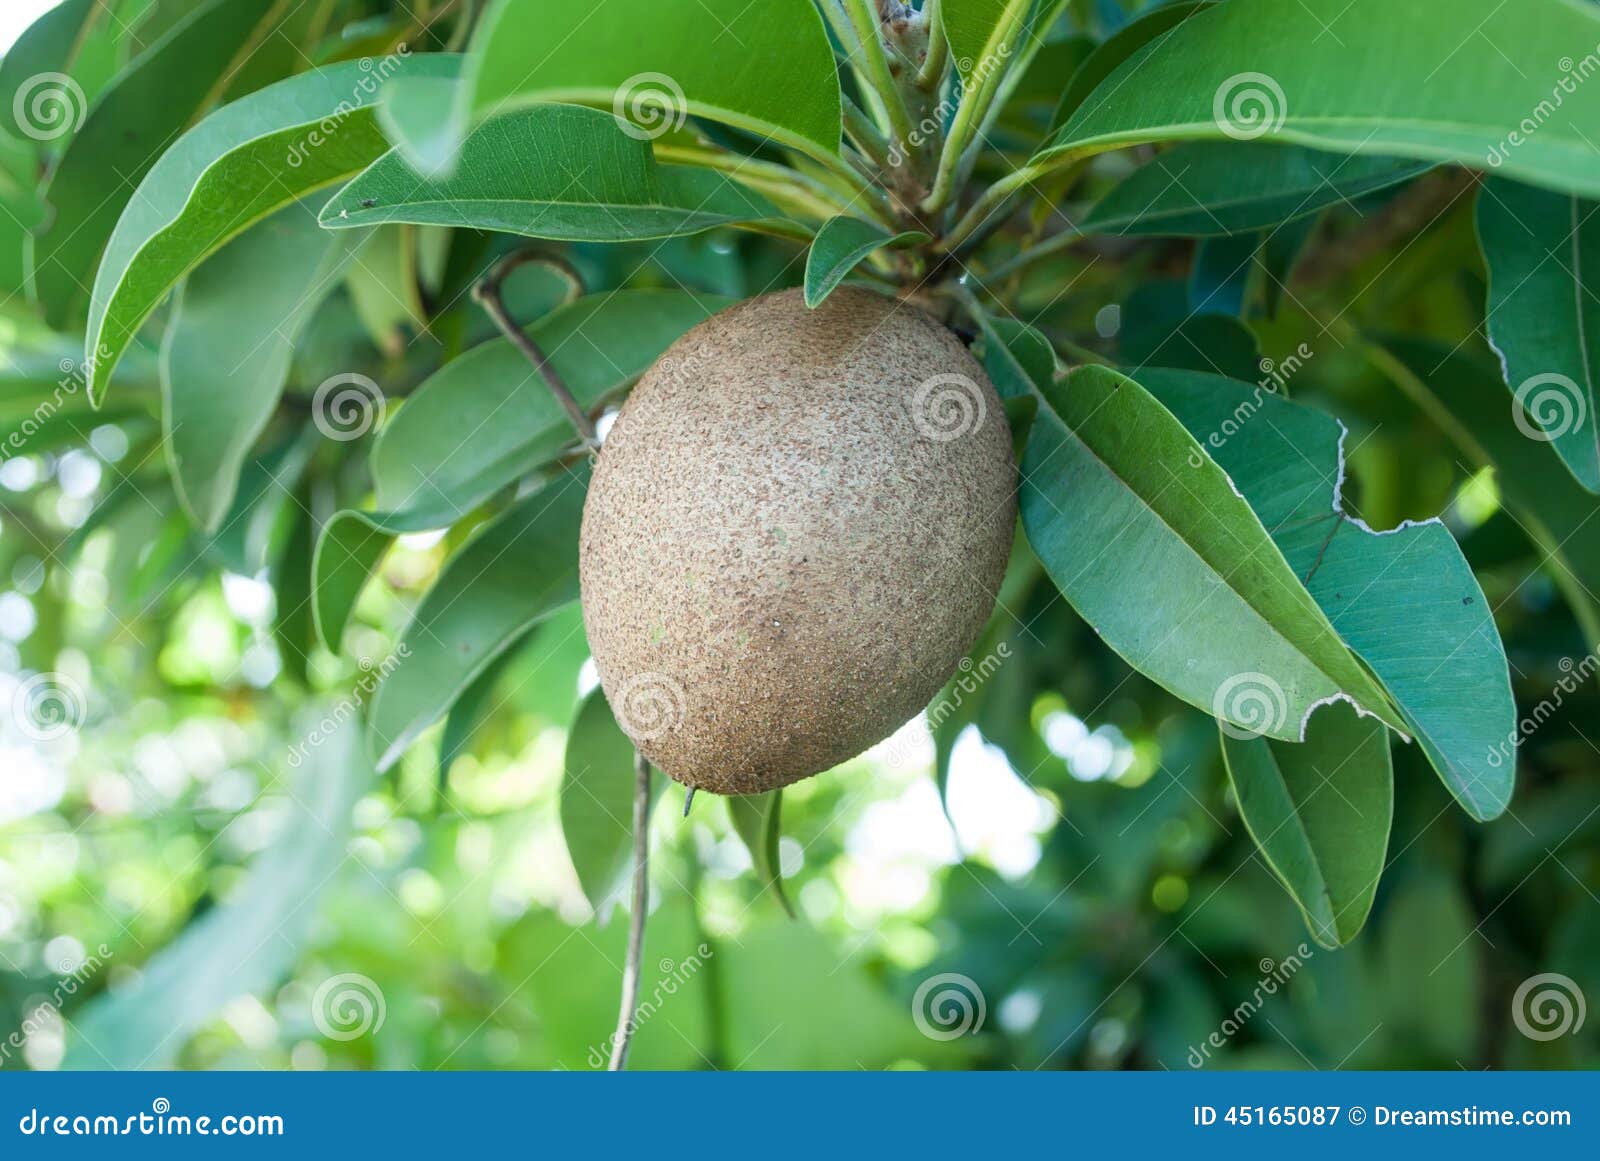 Sapodilla Fruit On The Tree Stock Image - Image of healthy, green: 45165087